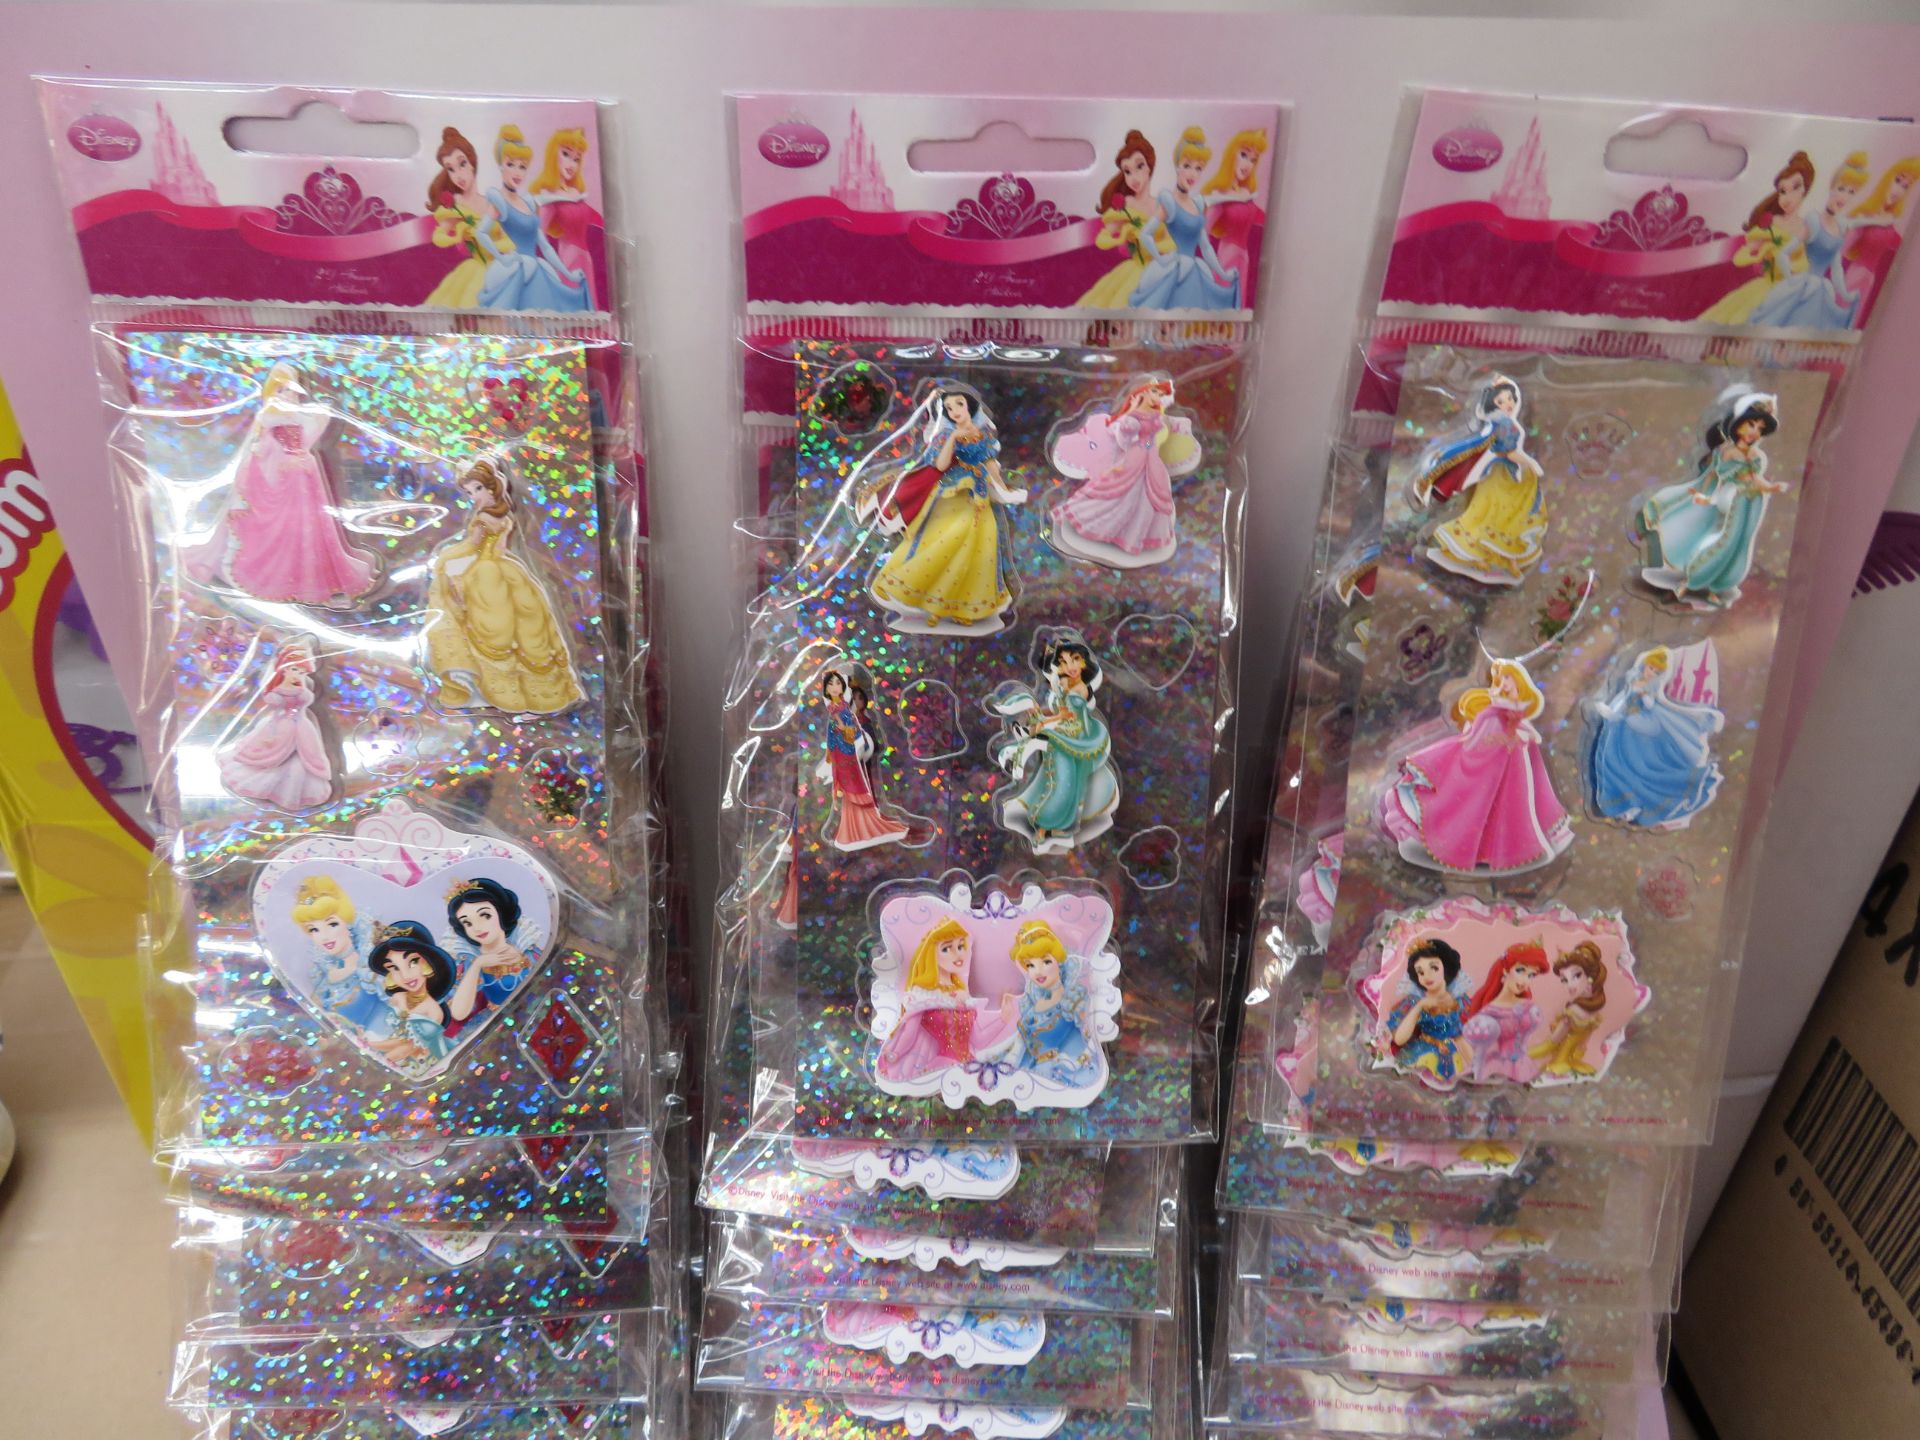 900 x PACKS of Disney Princess Foam 3D Stickers - Various Designs. Brand New Stock. RRP £1.99 per - Image 2 of 2